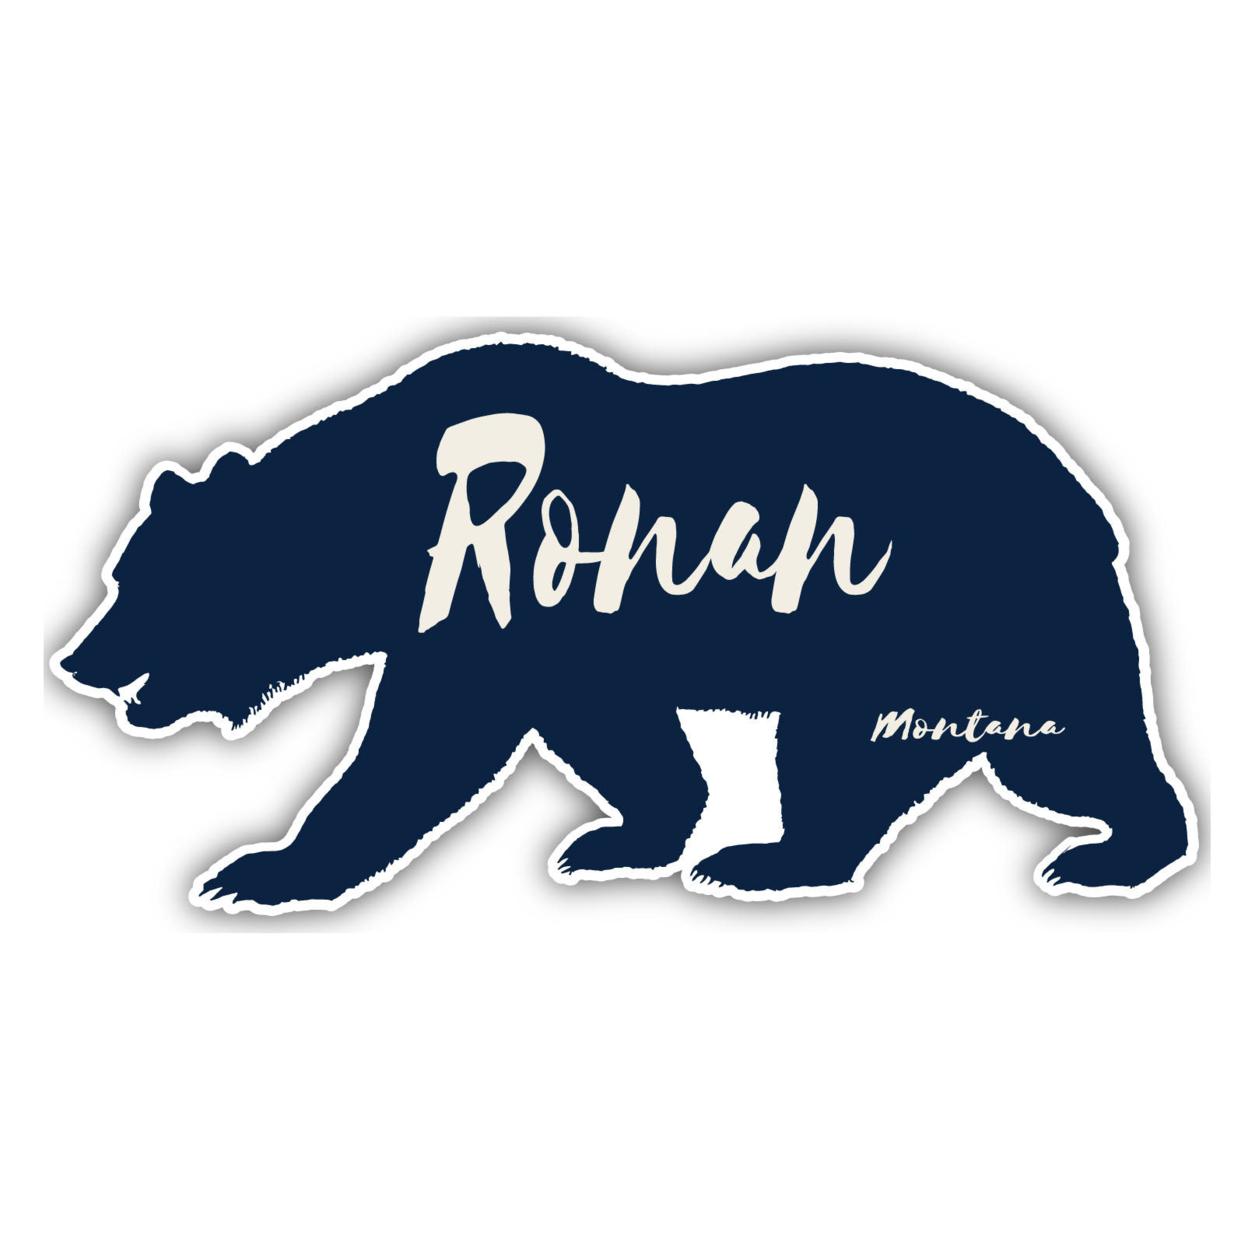 Ronan Montana Souvenir Decorative Stickers (Choose Theme And Size) - Single Unit, 2-Inch, Bear